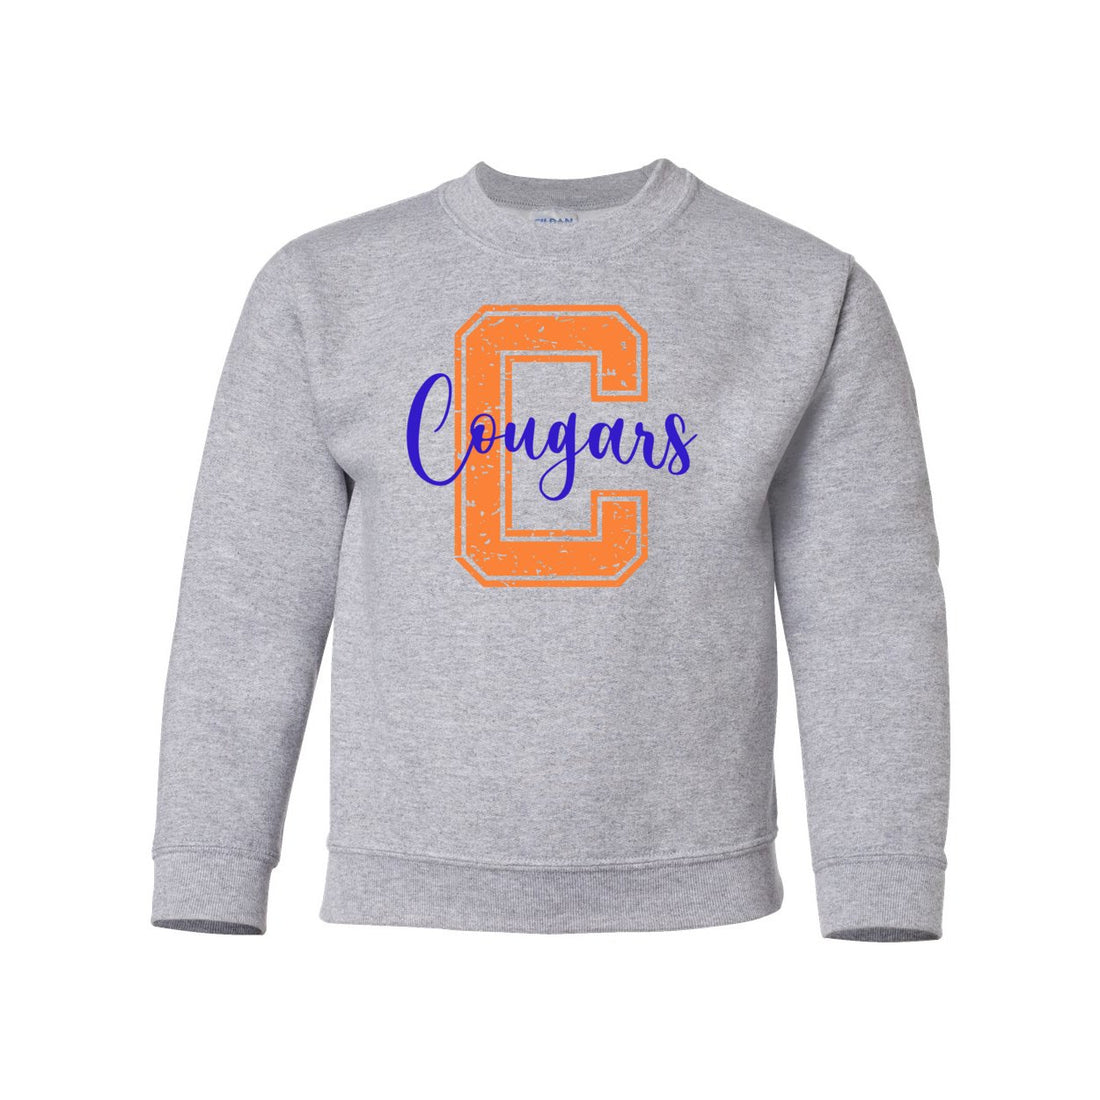 Cougars Youth Crewneck Sweatshirt - Kids/Babies - Positively Sassy - Cougars Youth Crewneck Sweatshirt